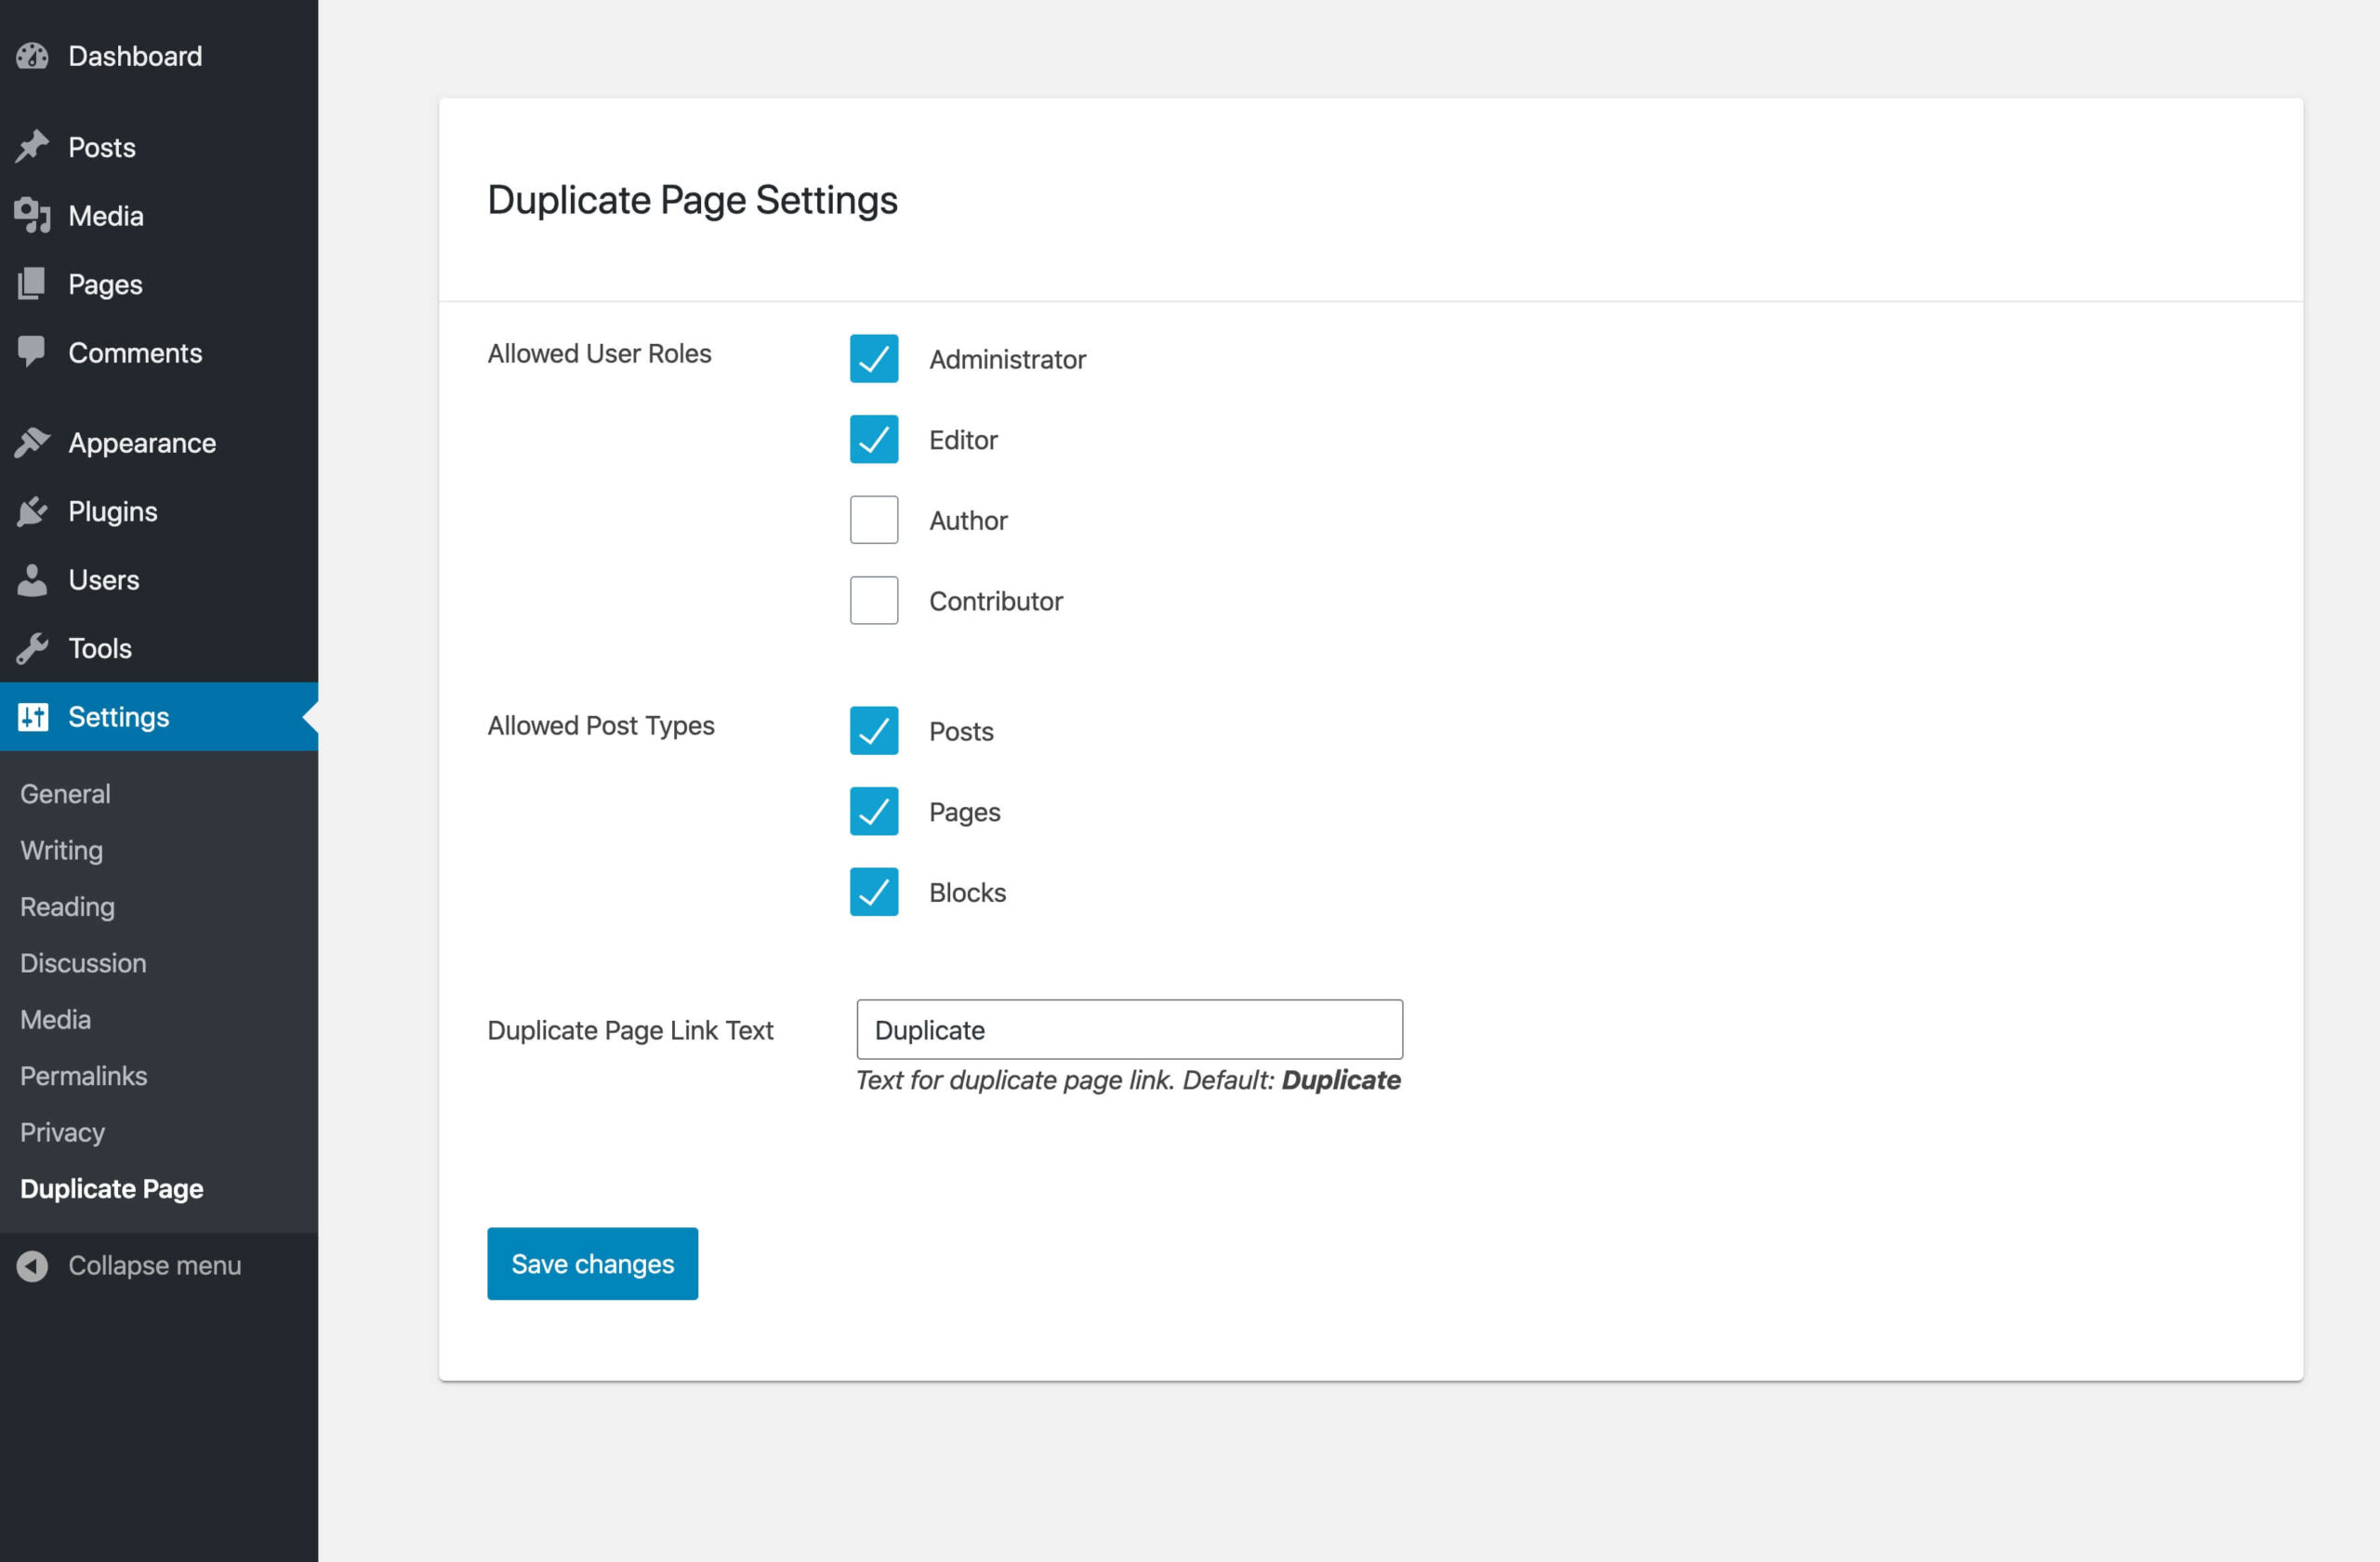 WP Duplicate Page settings screen